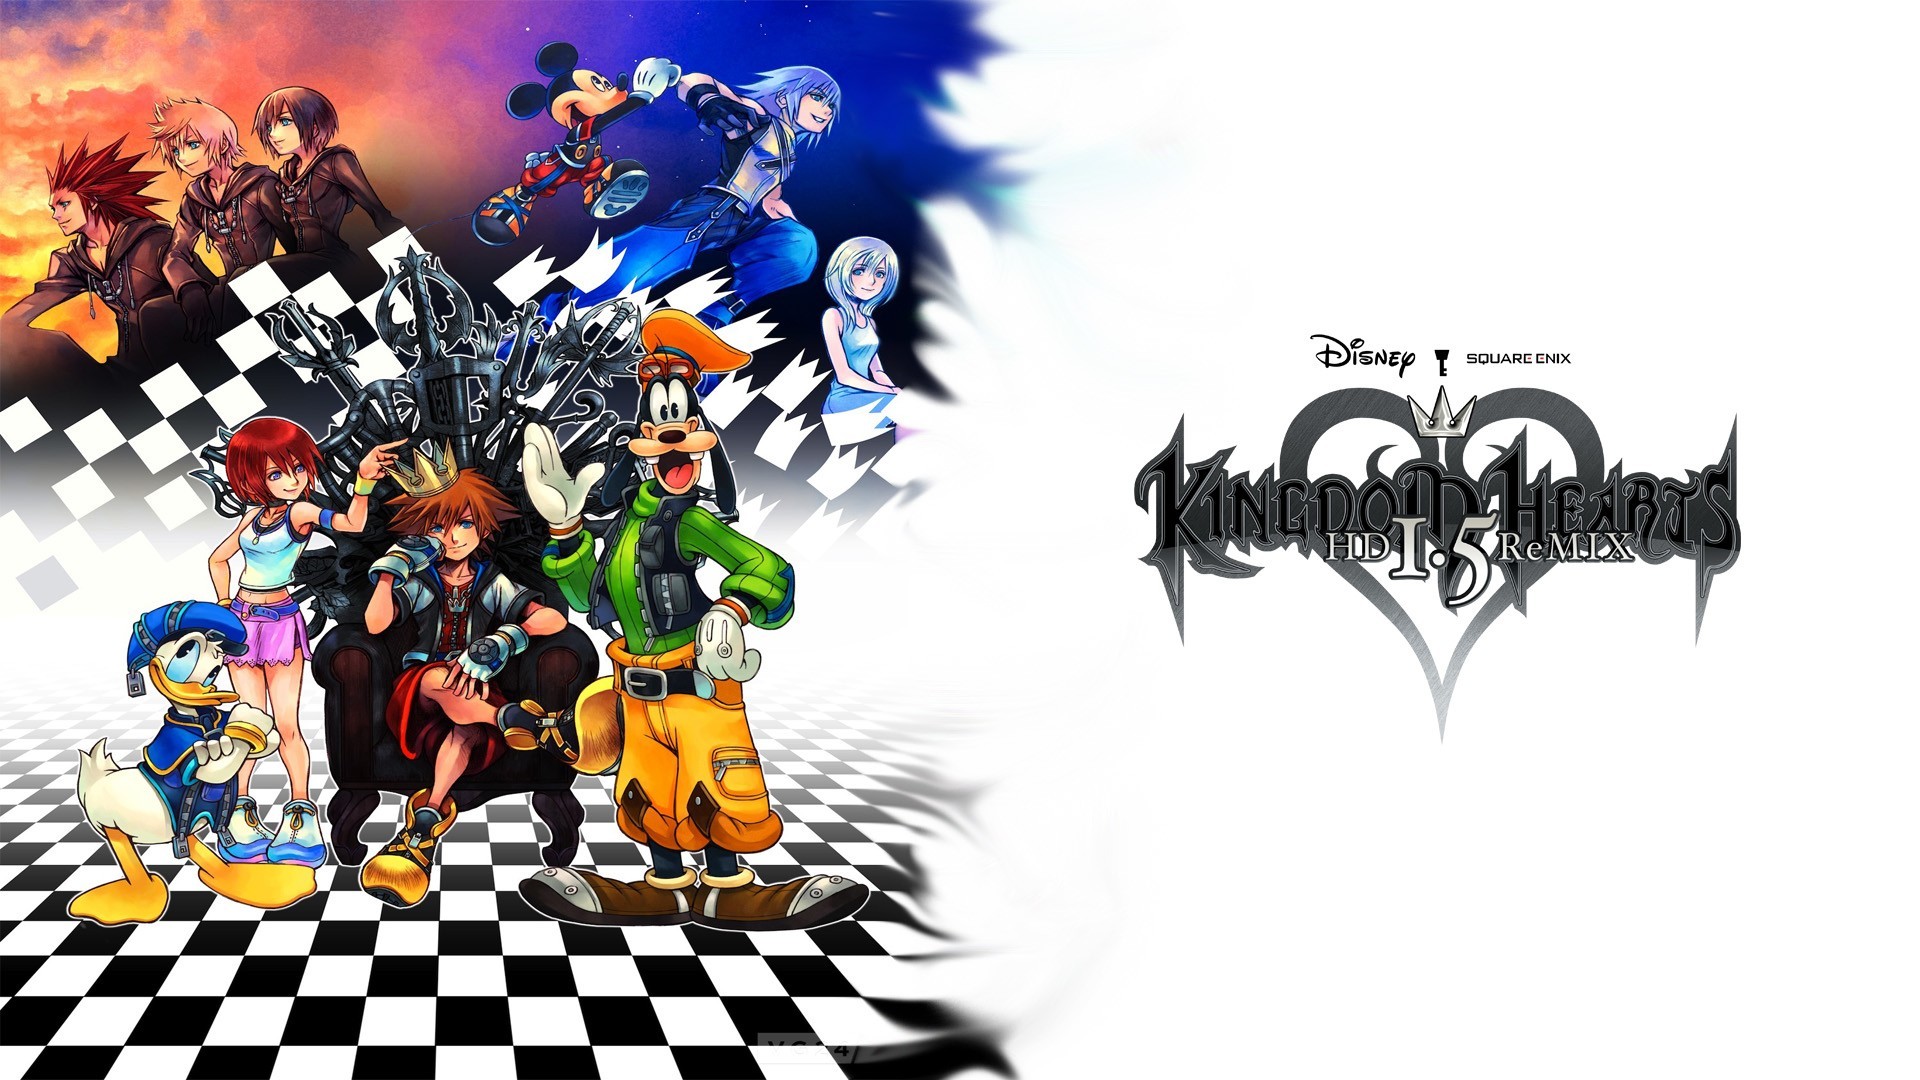 1920x1080 Oficial wallpaper Kingdom Hearts HD I.5 ReMIX Sora, Kairi, Riku, Donal,  Goofy, Mickey, Namine, Xion, Roxas and Axel | Kingdom Hearts HD I.5 ReMIX  ...